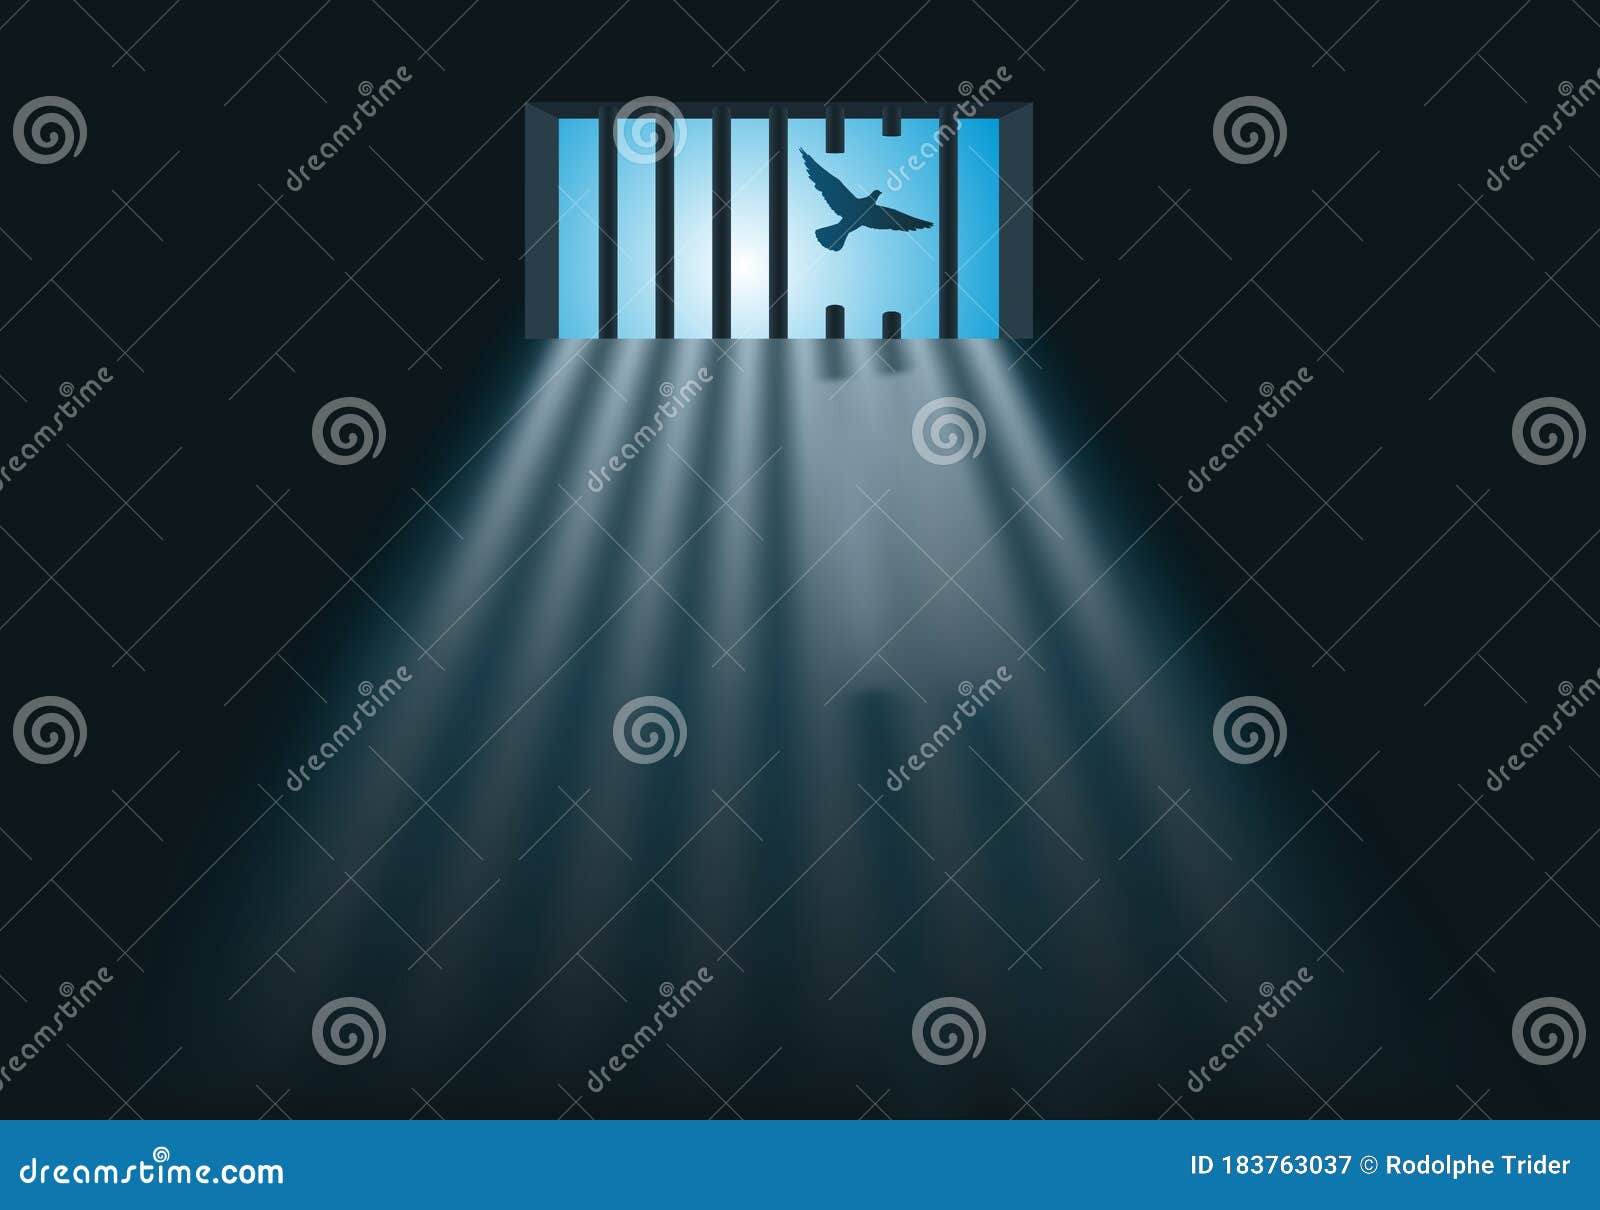 Break, crime, escape, freedom, jail, prison icon - Download on Iconfinder